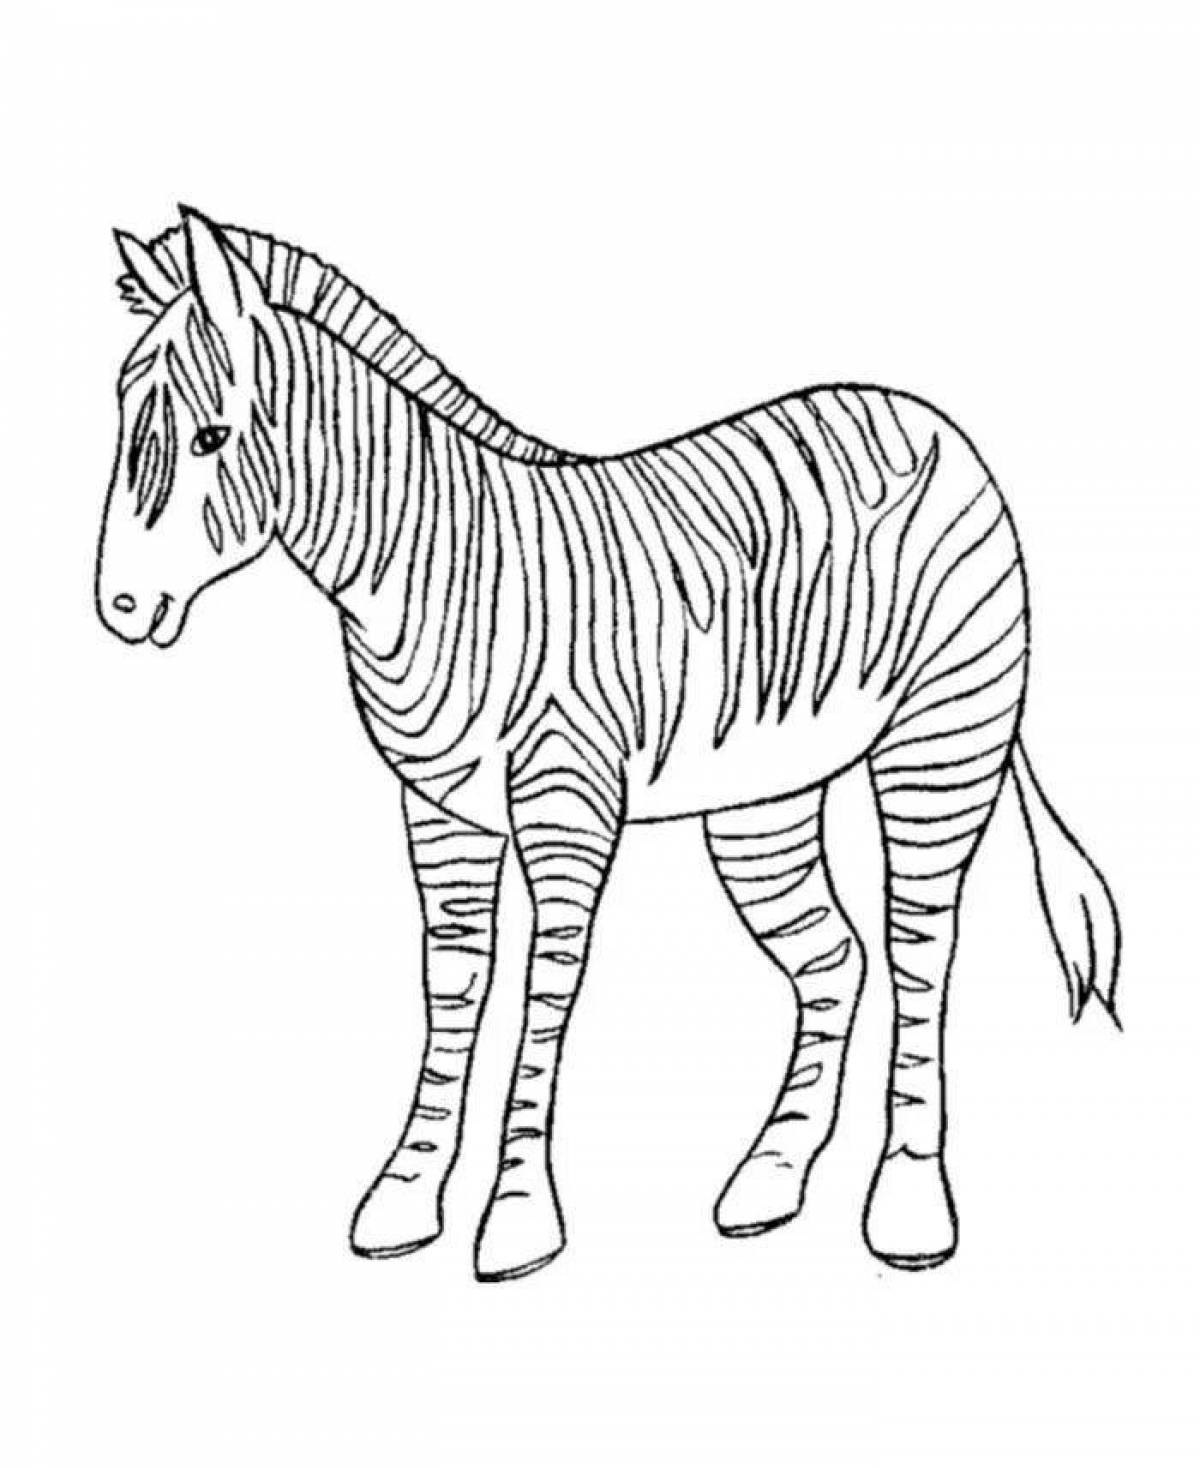 Fabulous zebra without stripes for kids